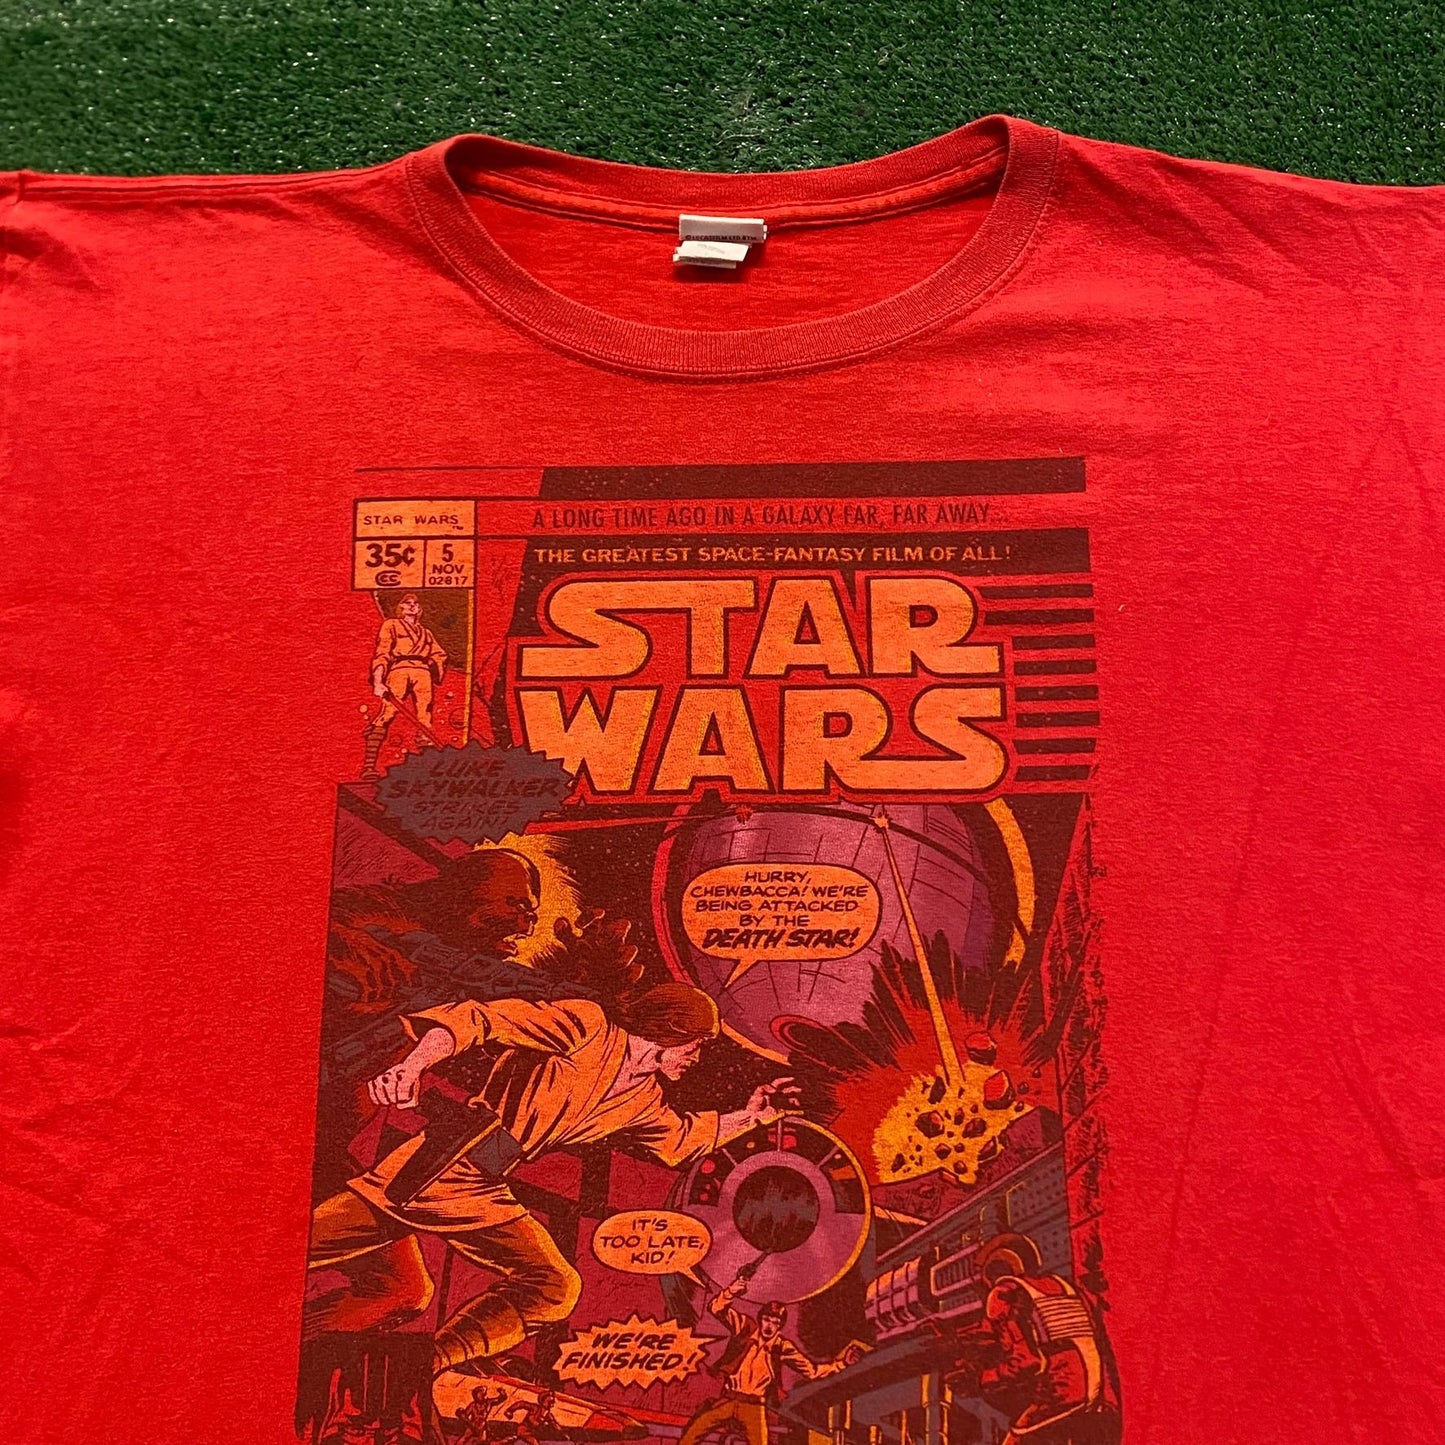 Star Wars: Episode IV Vintage Movie T-Shirt